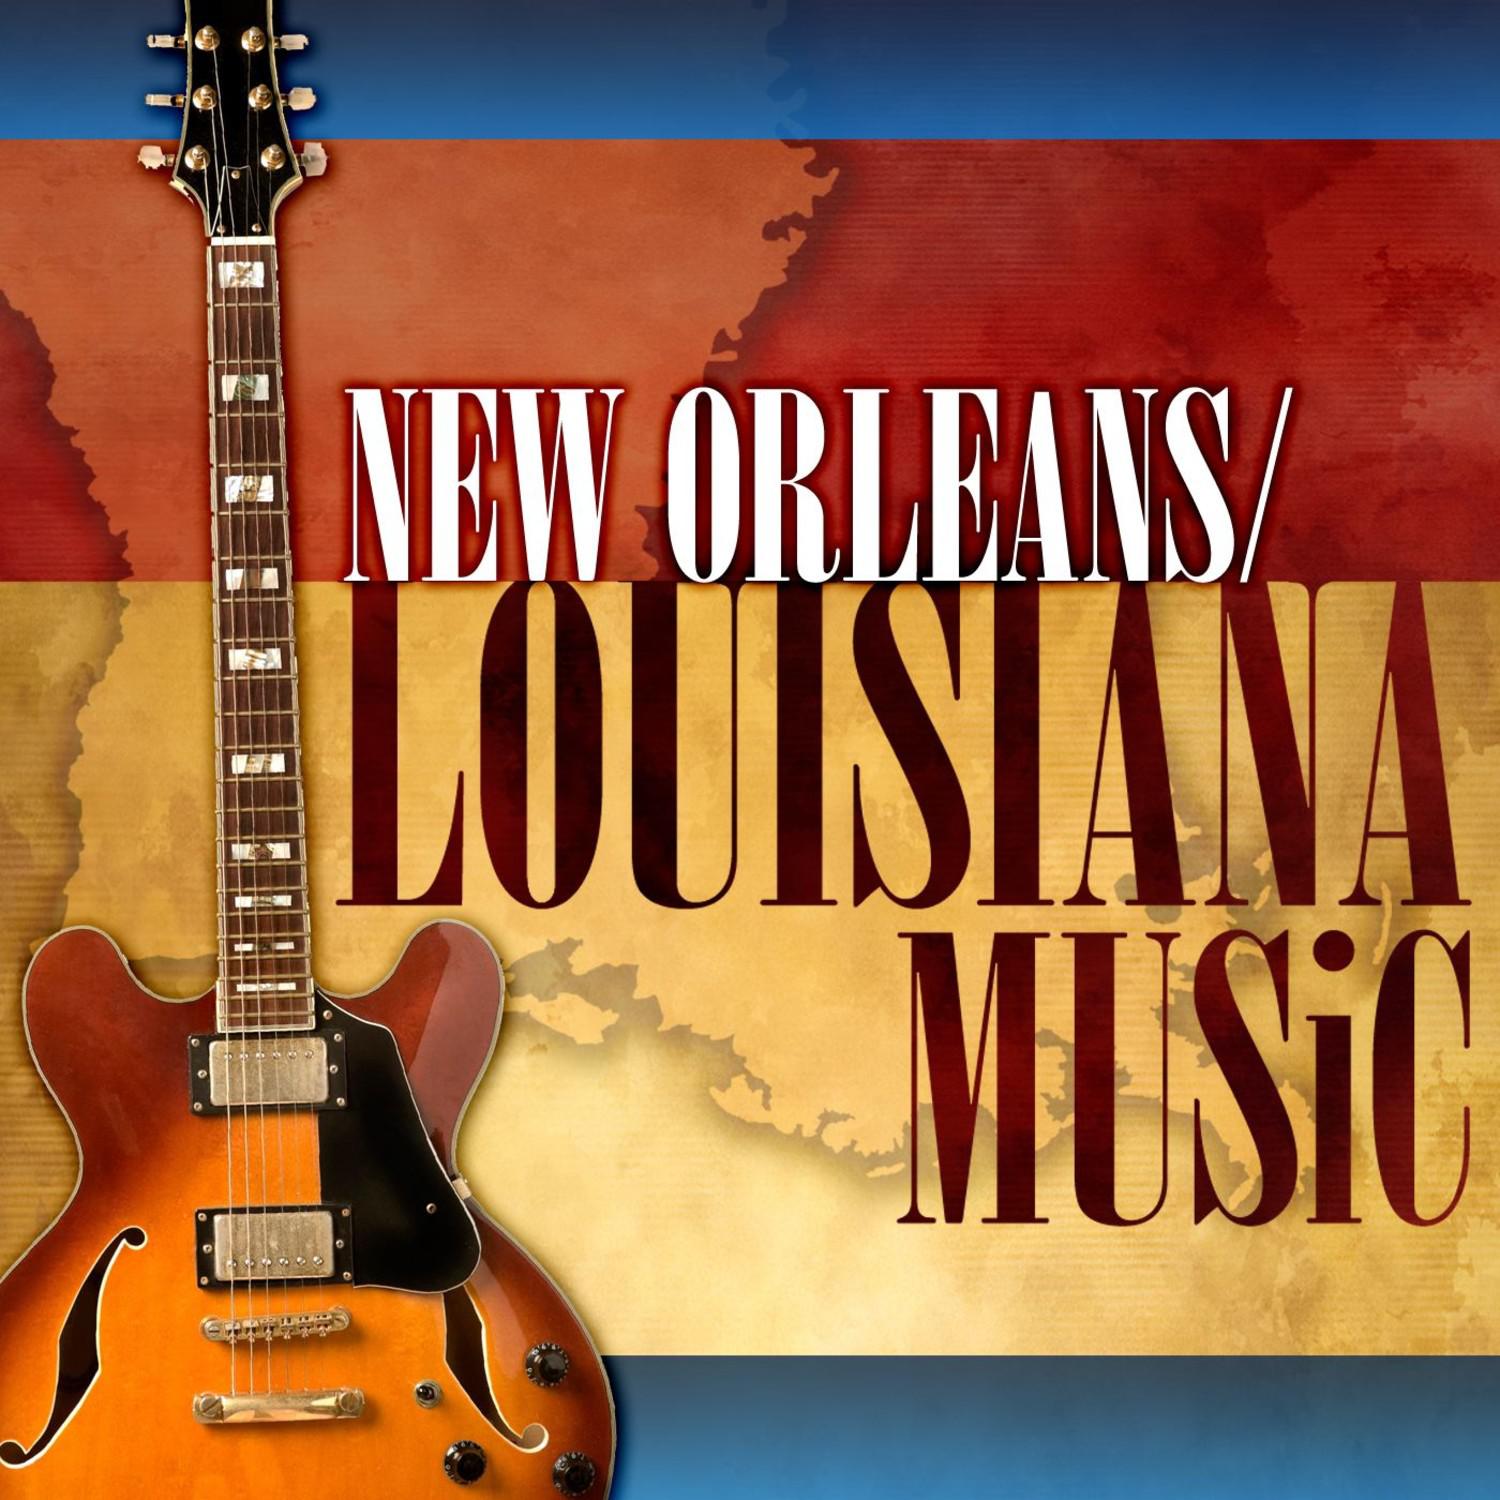 New Orleans / Louisiana Music